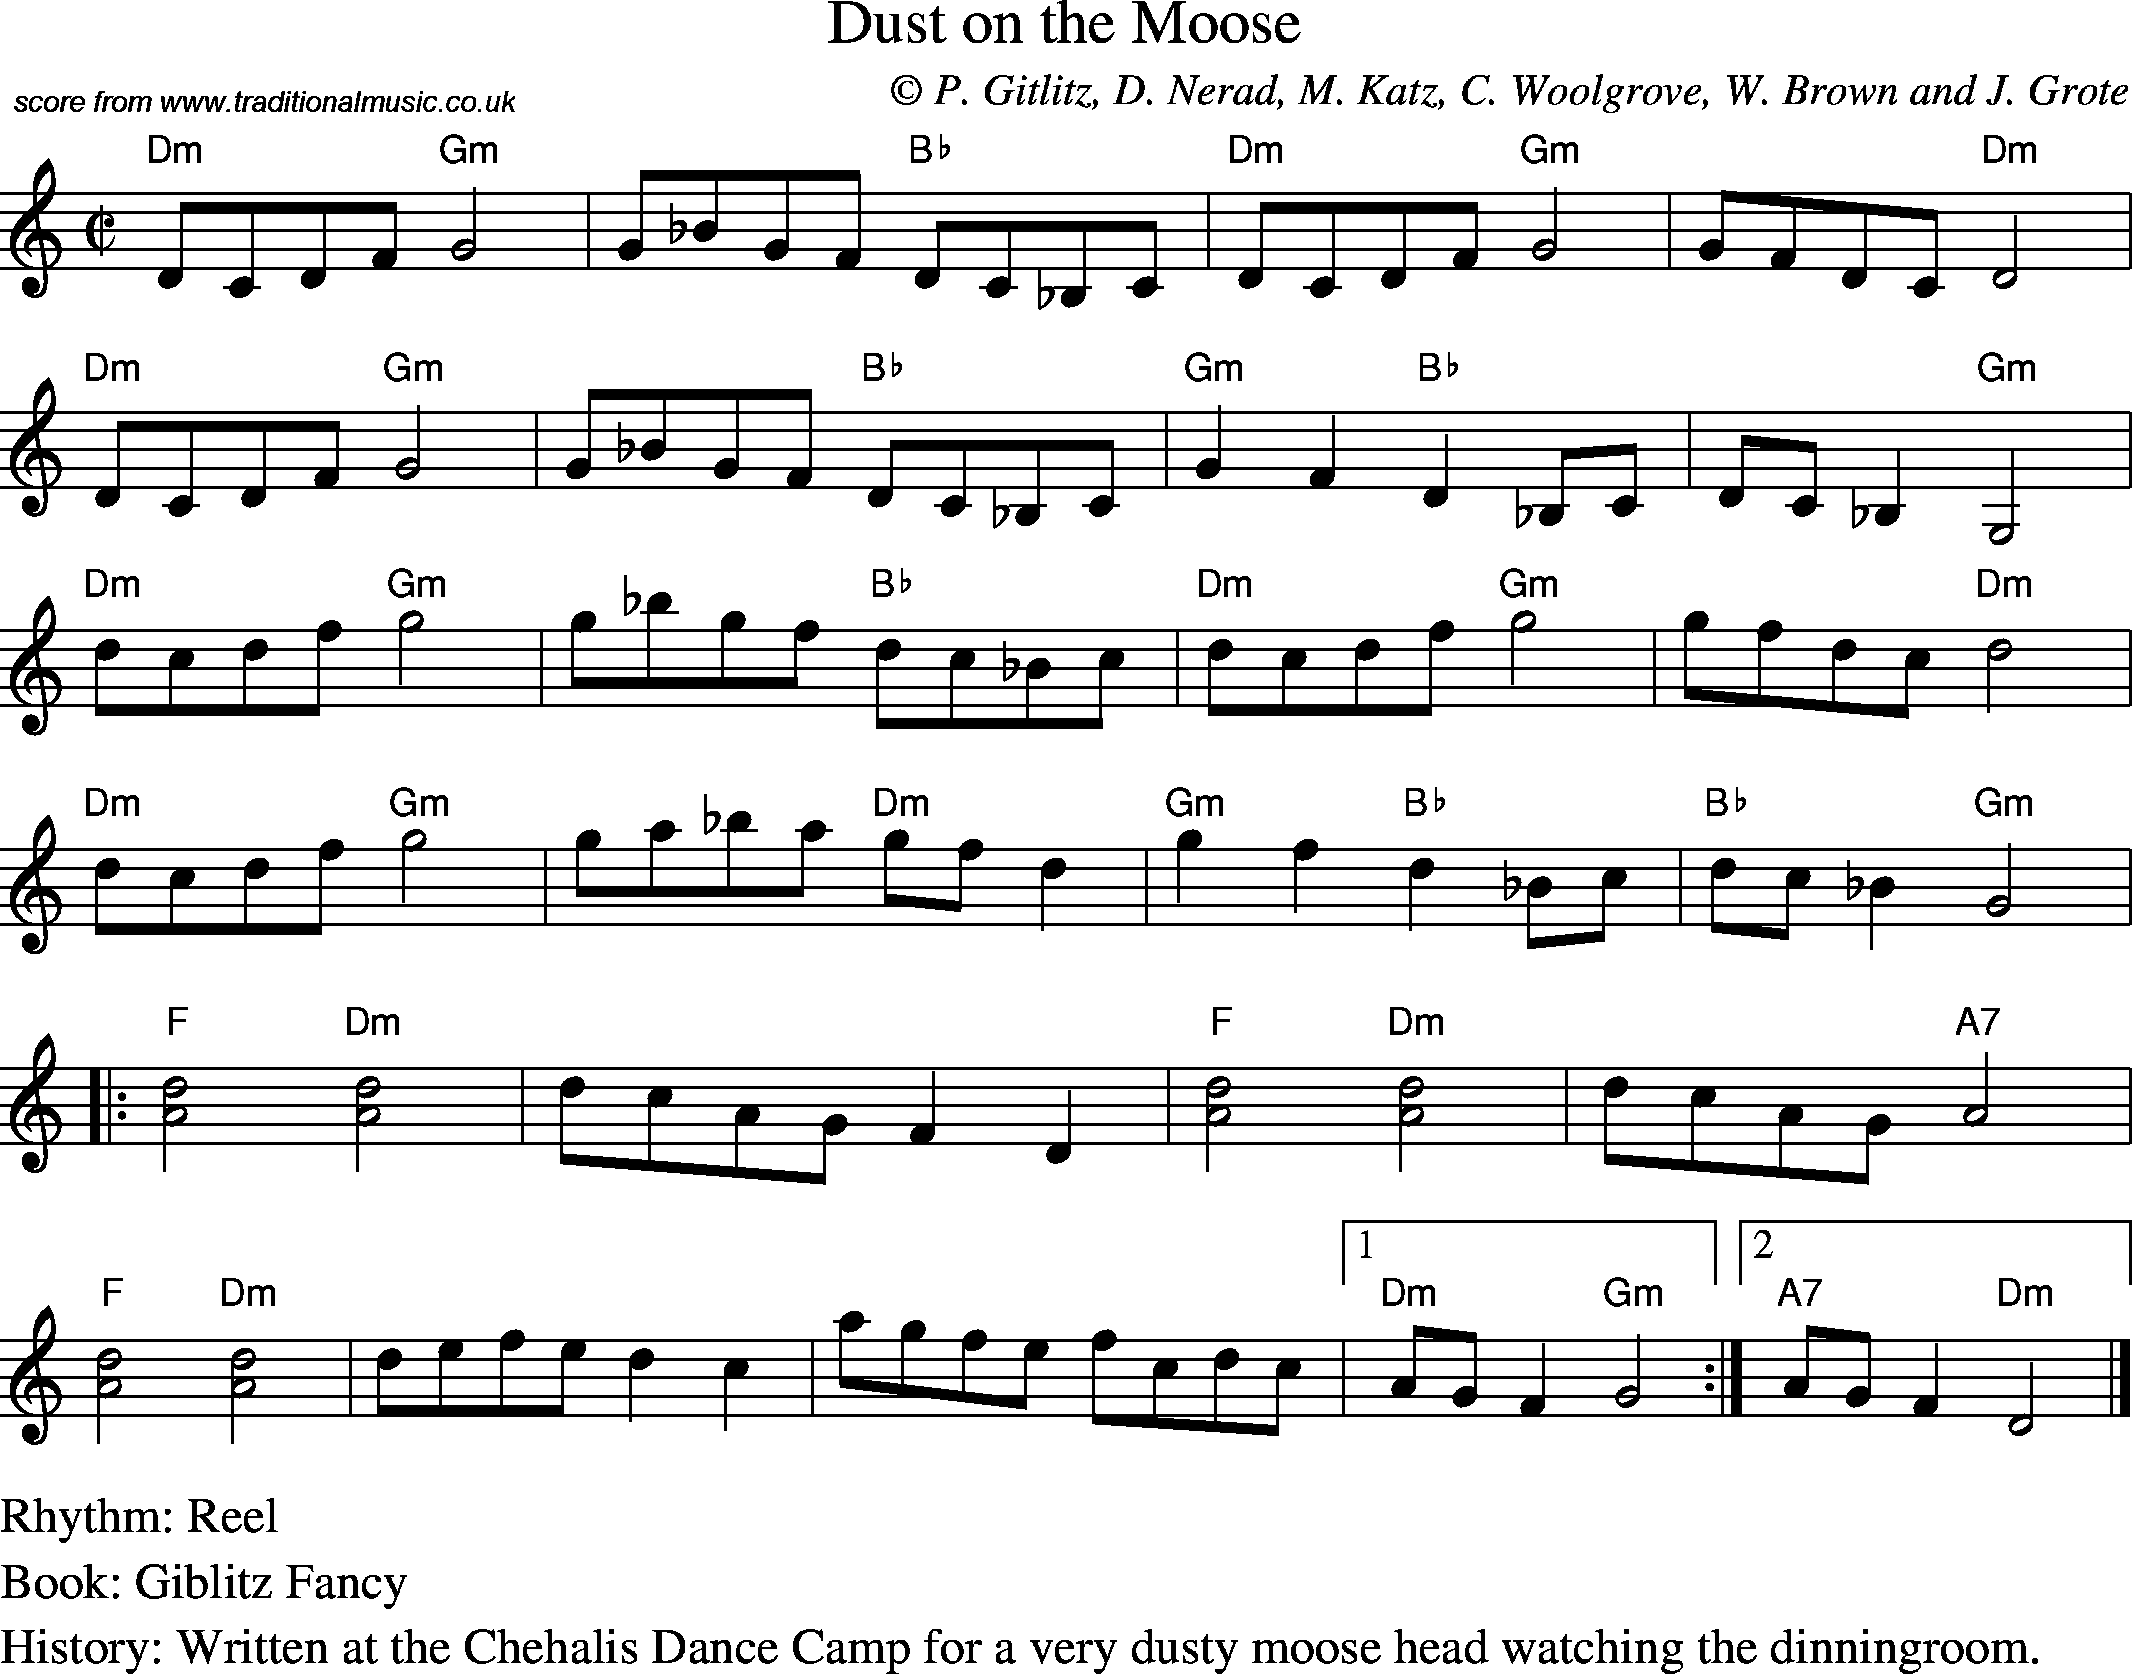 Sheet Music Score for Reel - Dust on the Moose